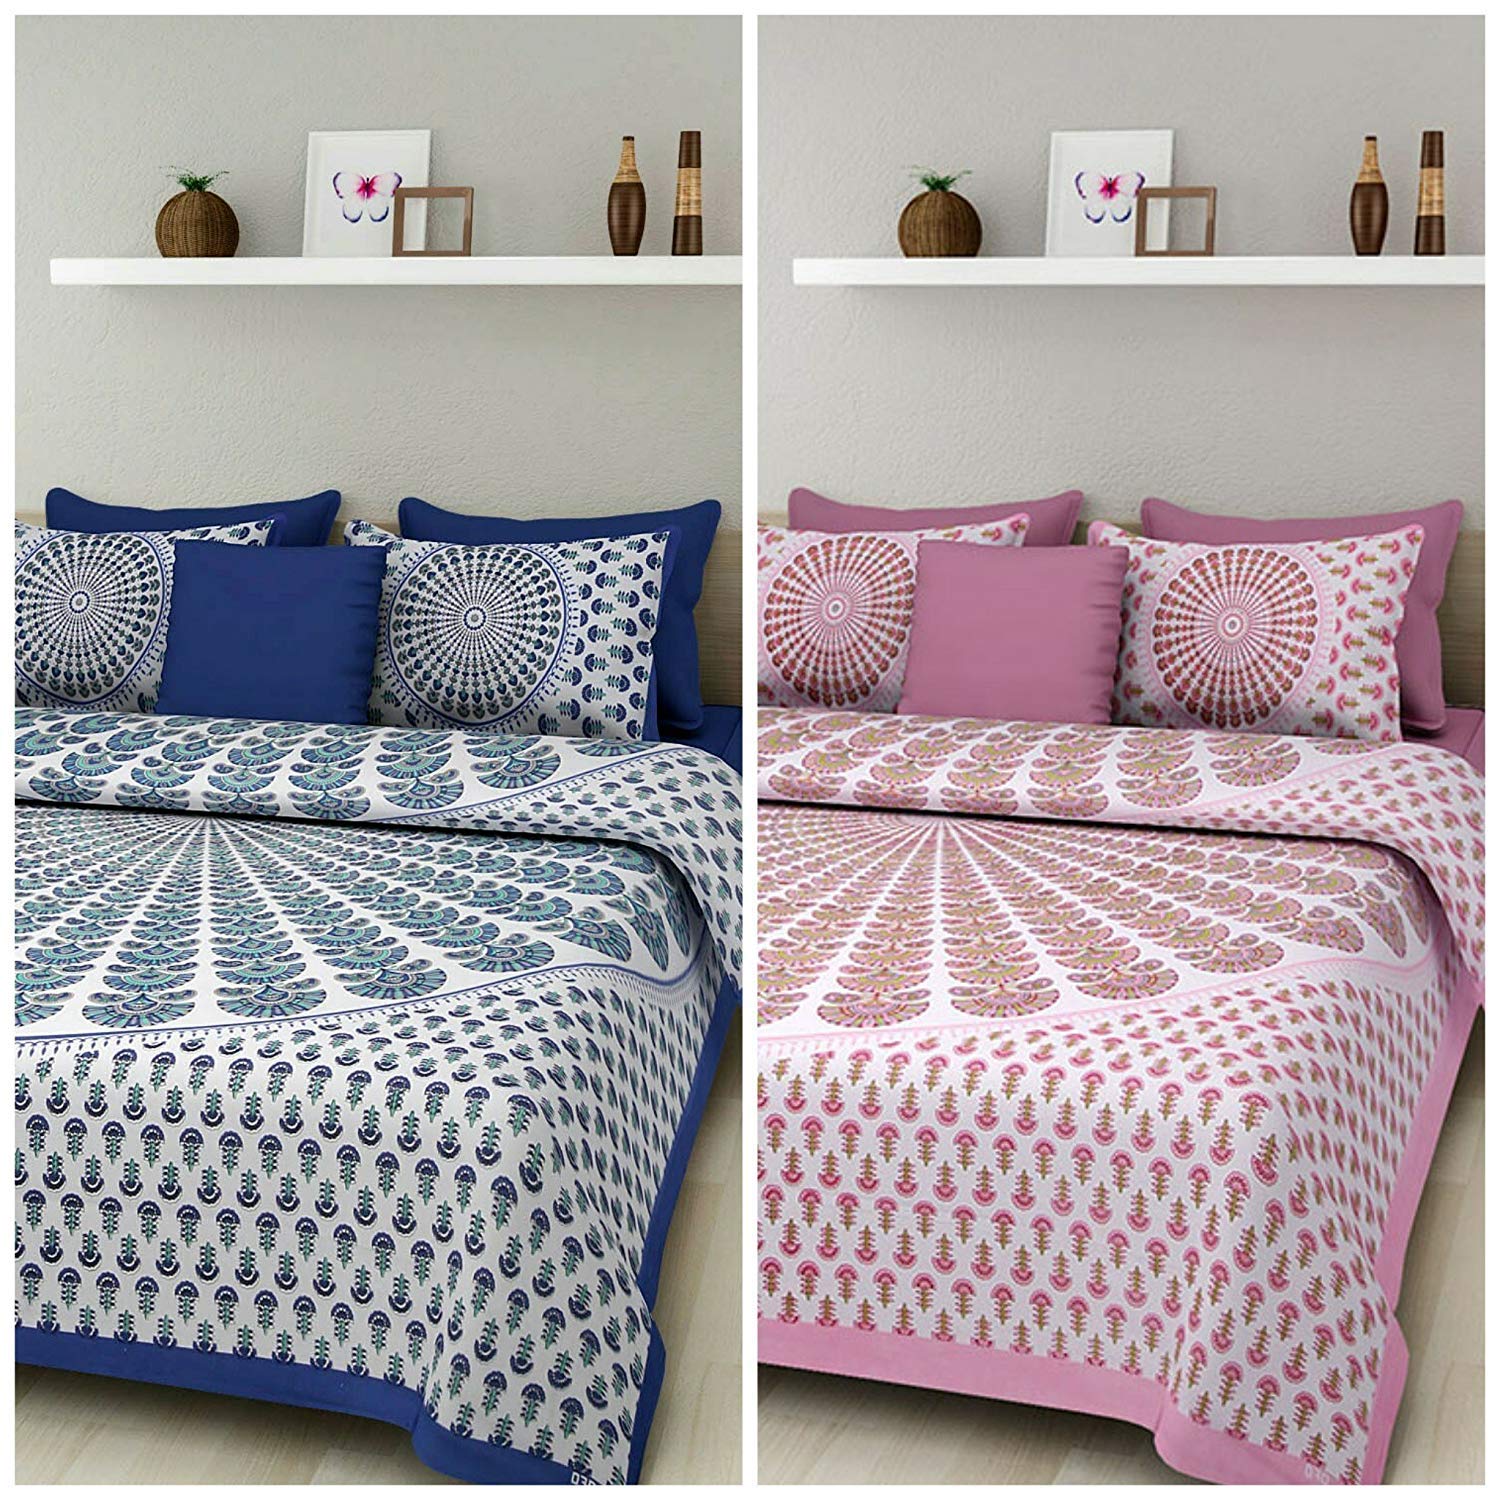 Jaipur Prints 100 % Cotton Jaipuri Rajasthani Double 2 Bedsheet Combo with 4 Pillow Cover JAIPUR PRINTS